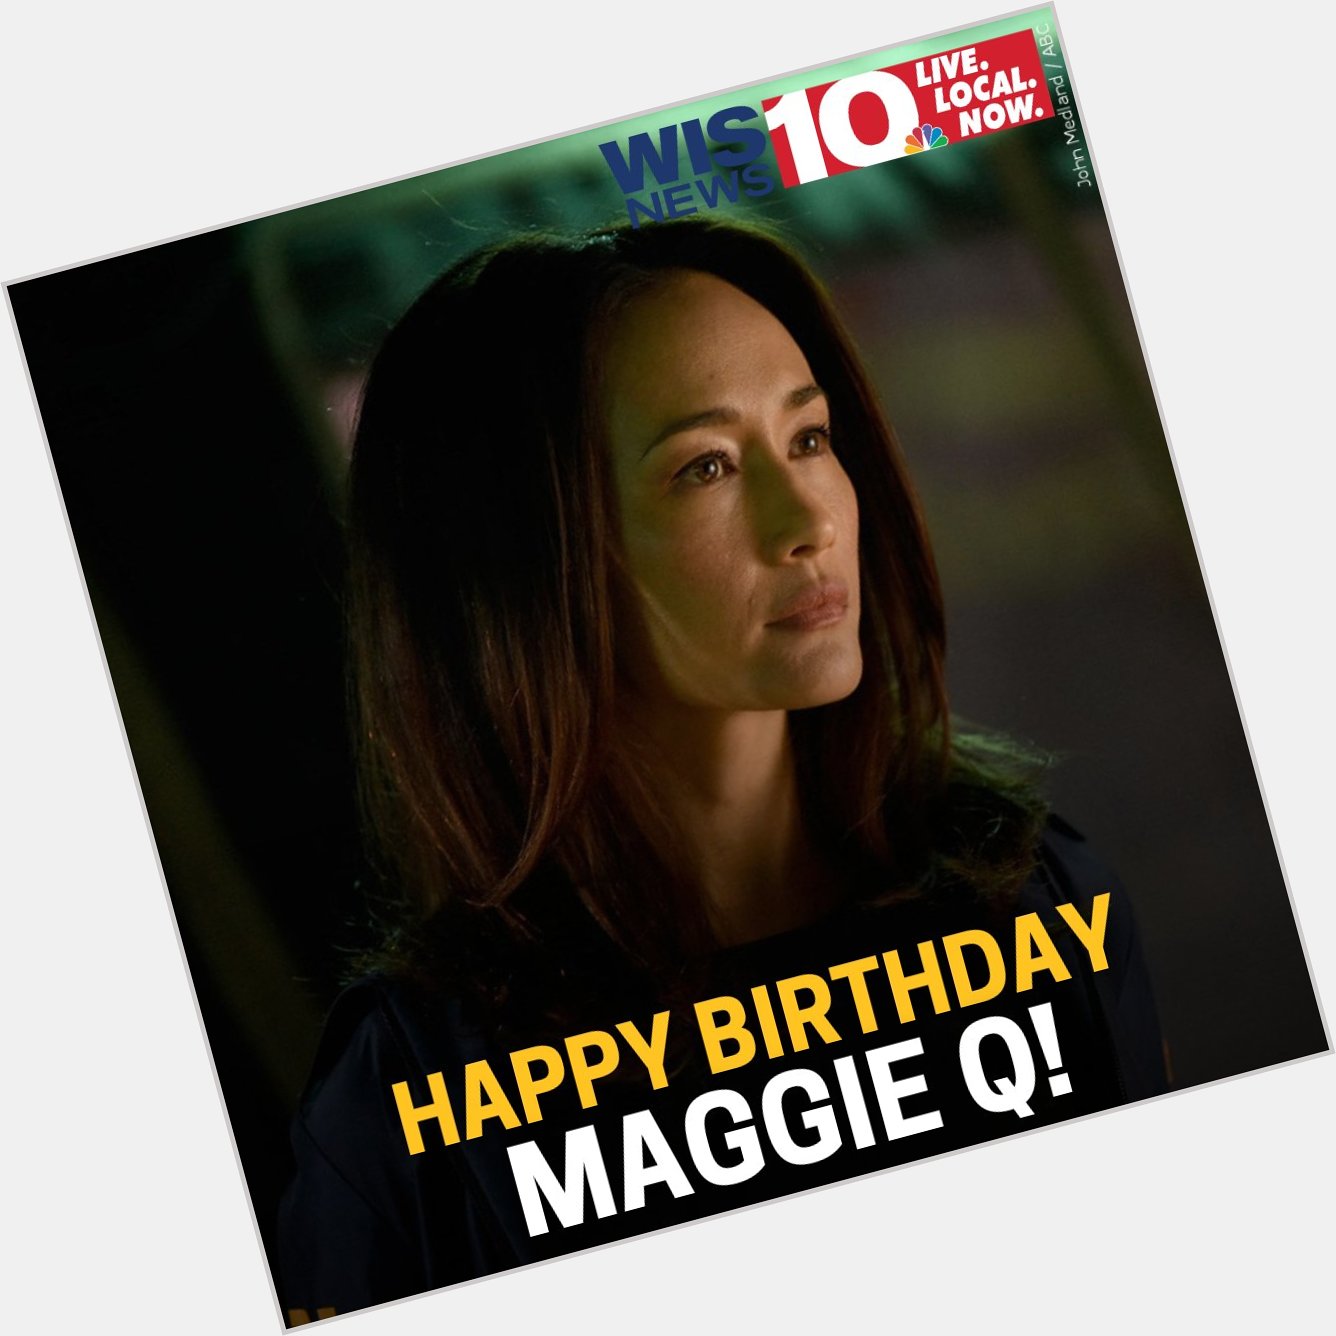 Happy birthday Maggie Q! 